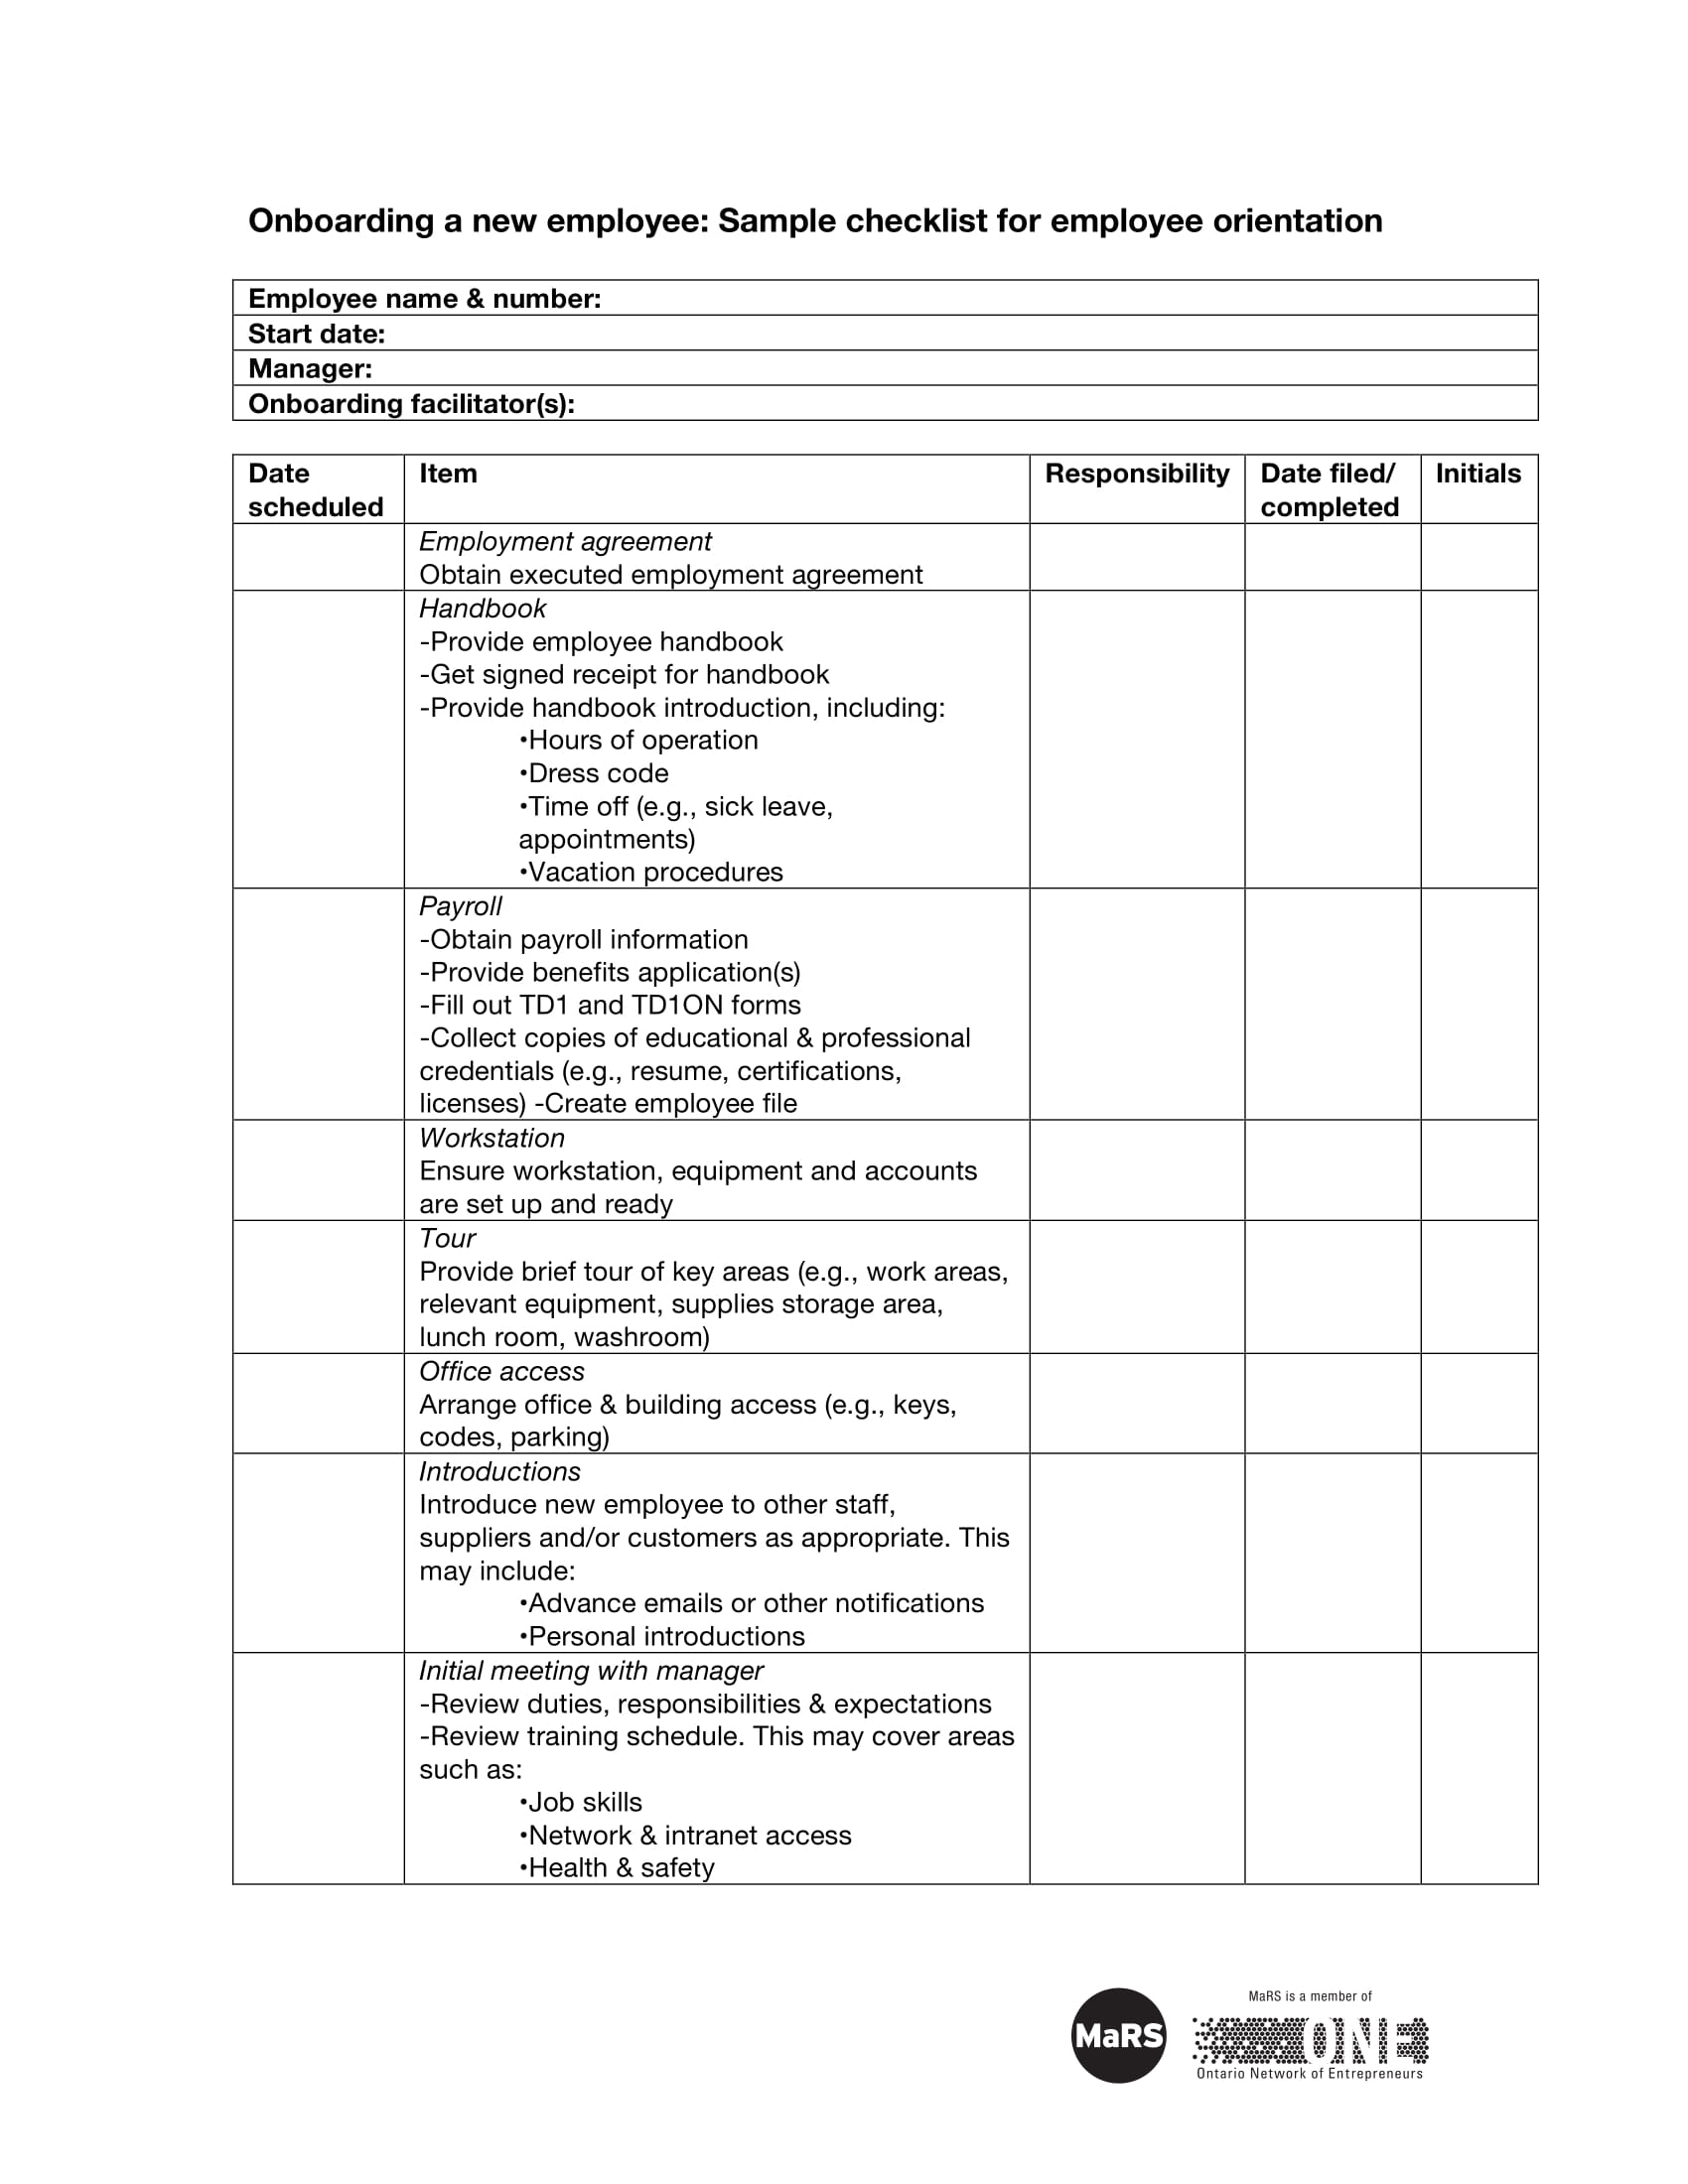 sample checklist for employee orientation